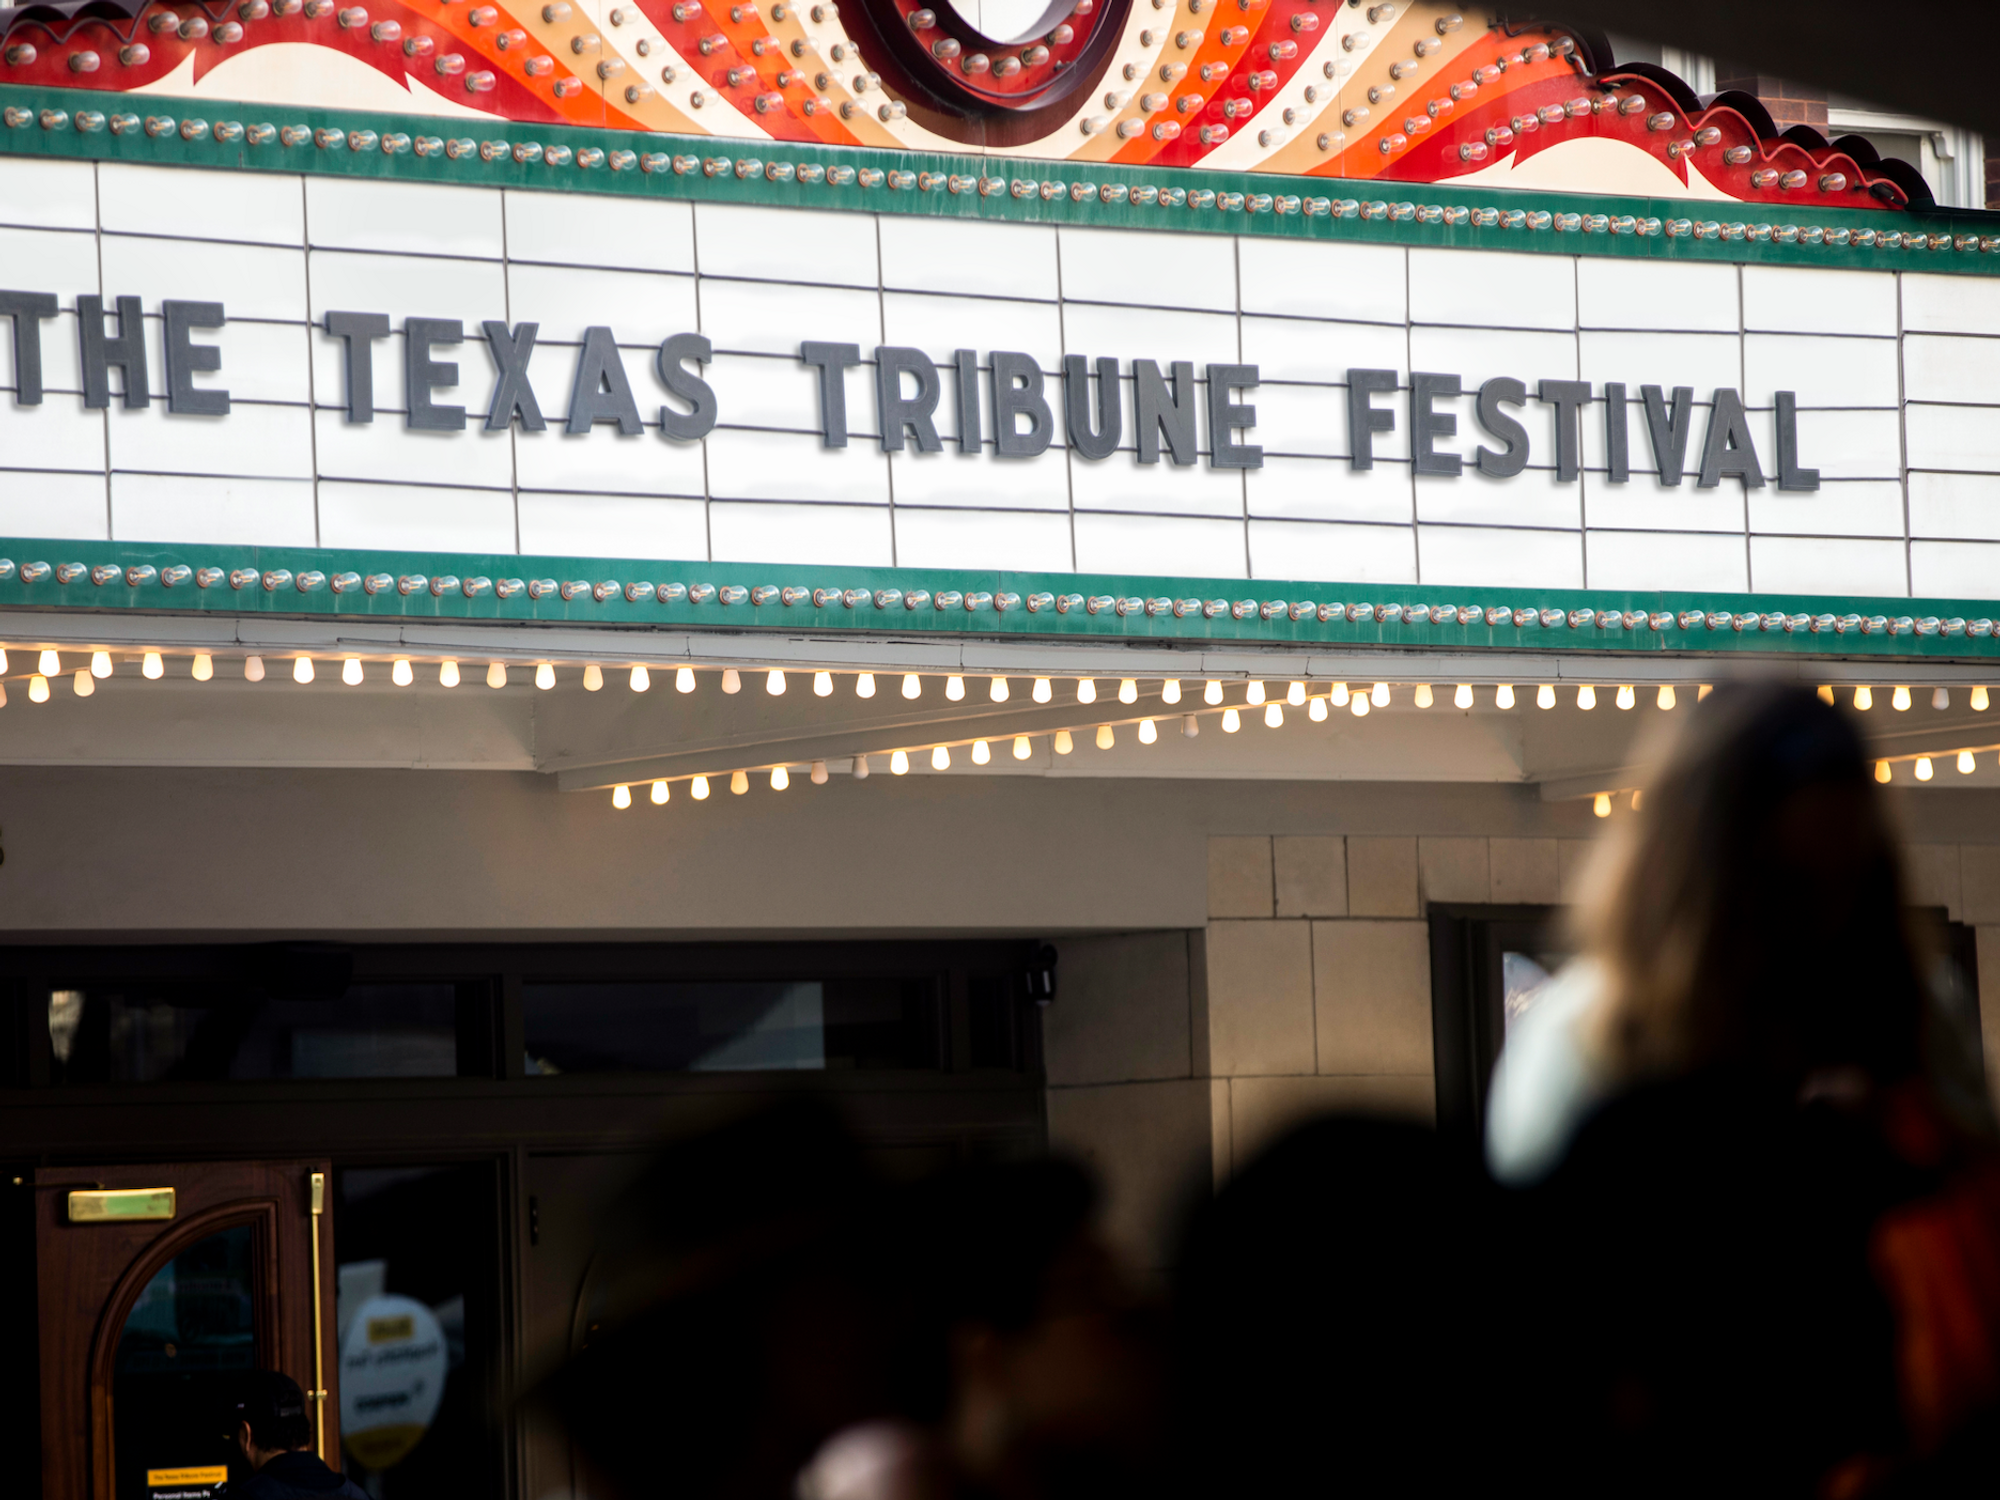 Texas Tribune Festival